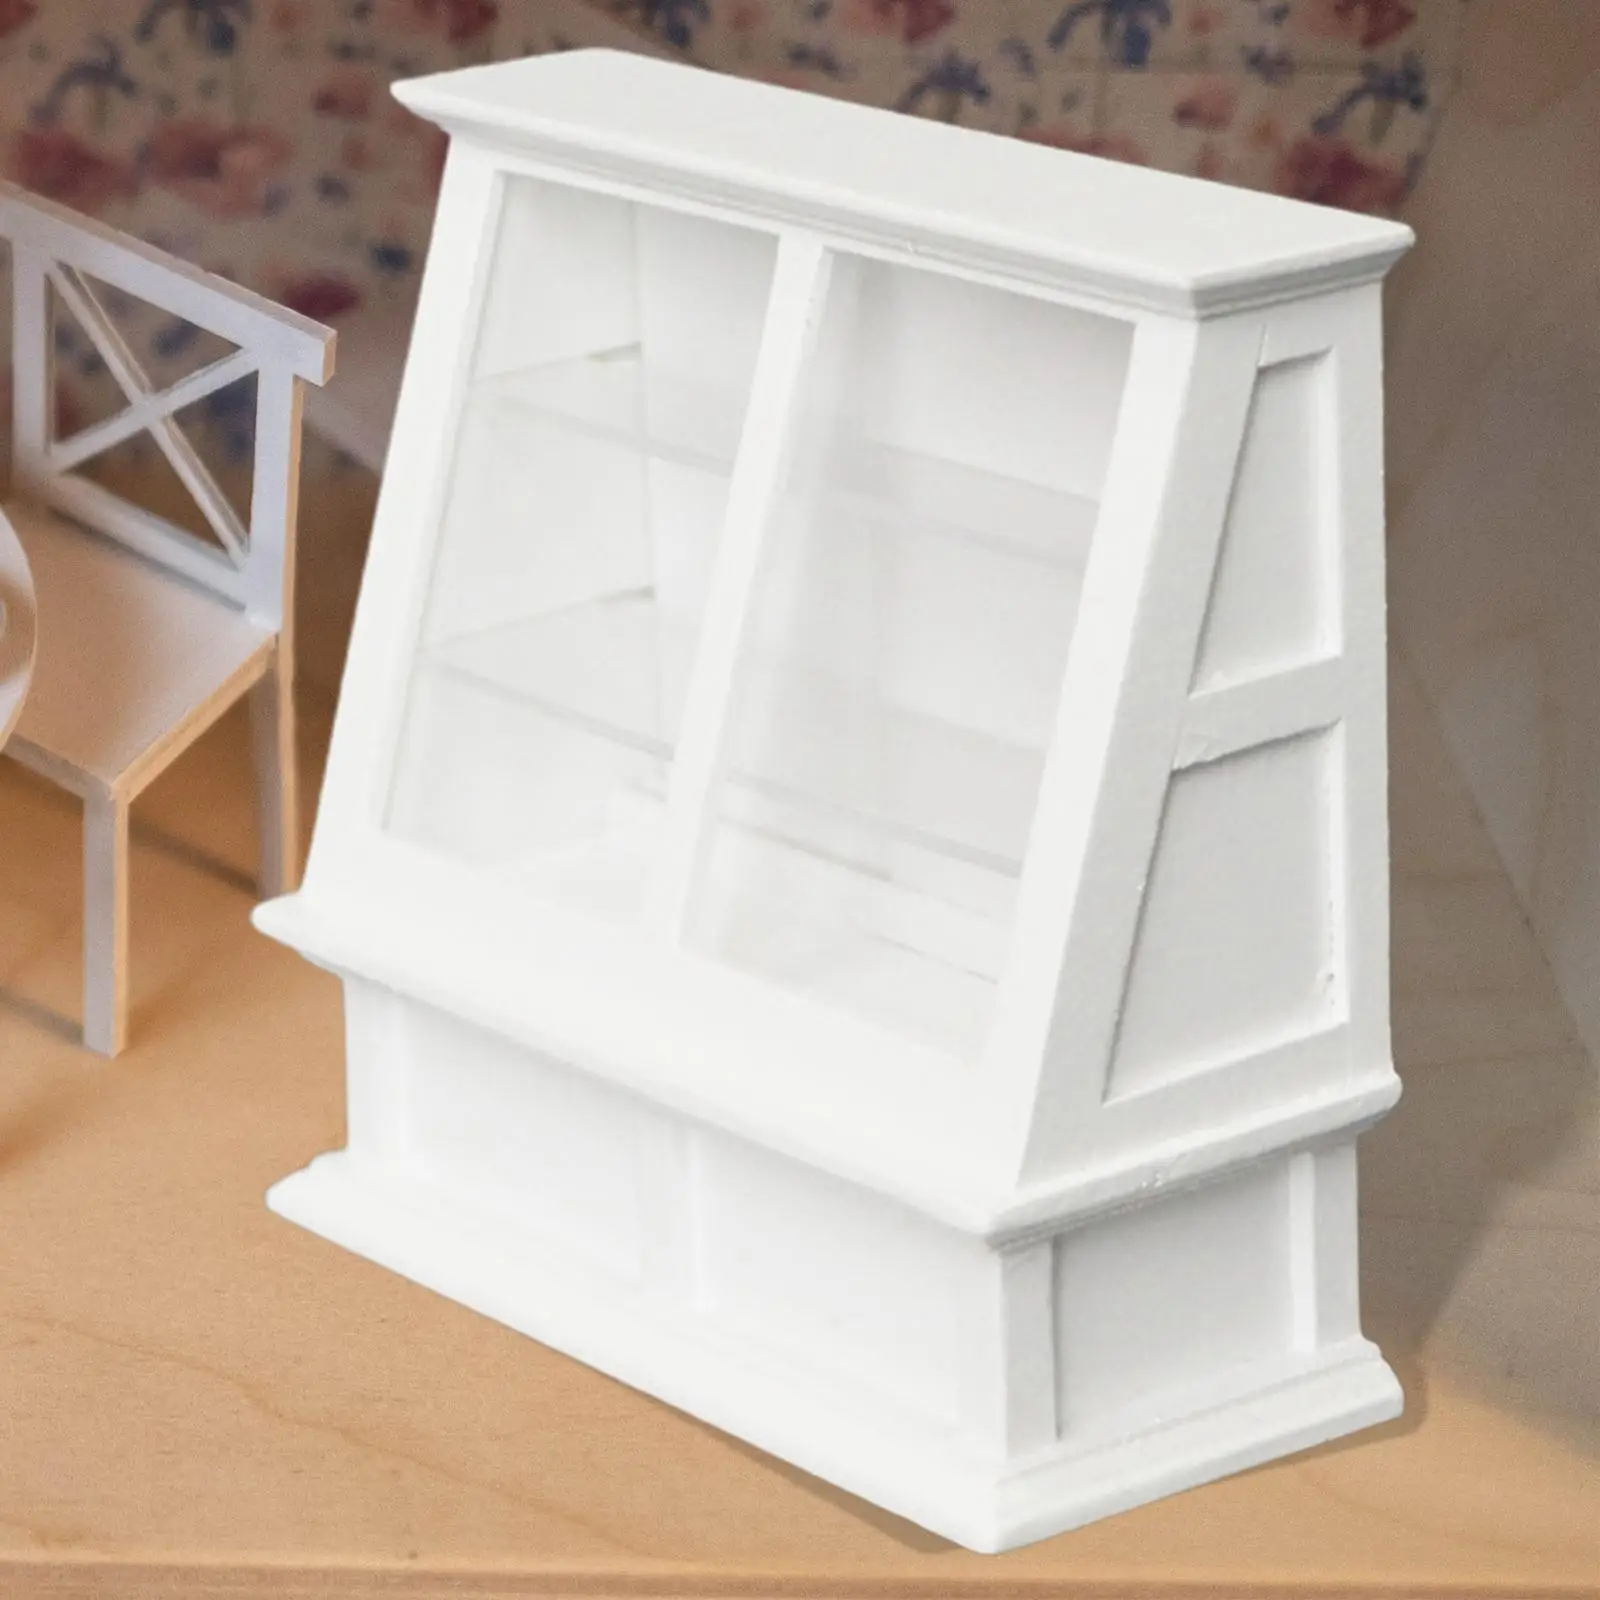 Miniature Shop Cake Cabinet Display Shelves for 1:12 Dollhouse Playhouse